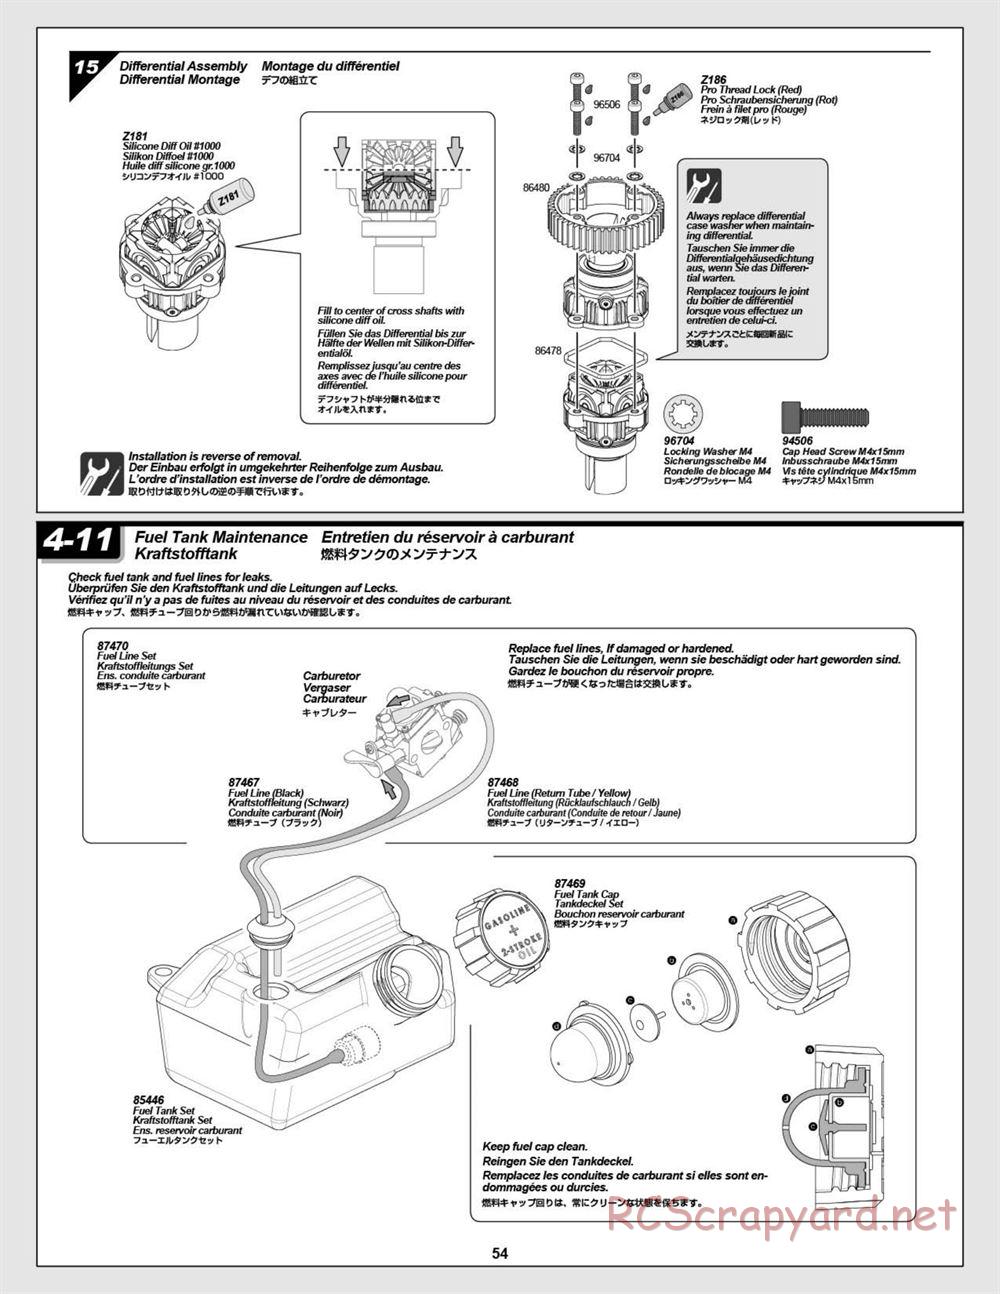 HPI - Baja 5B 2.0 RTR - Manual - Page 54